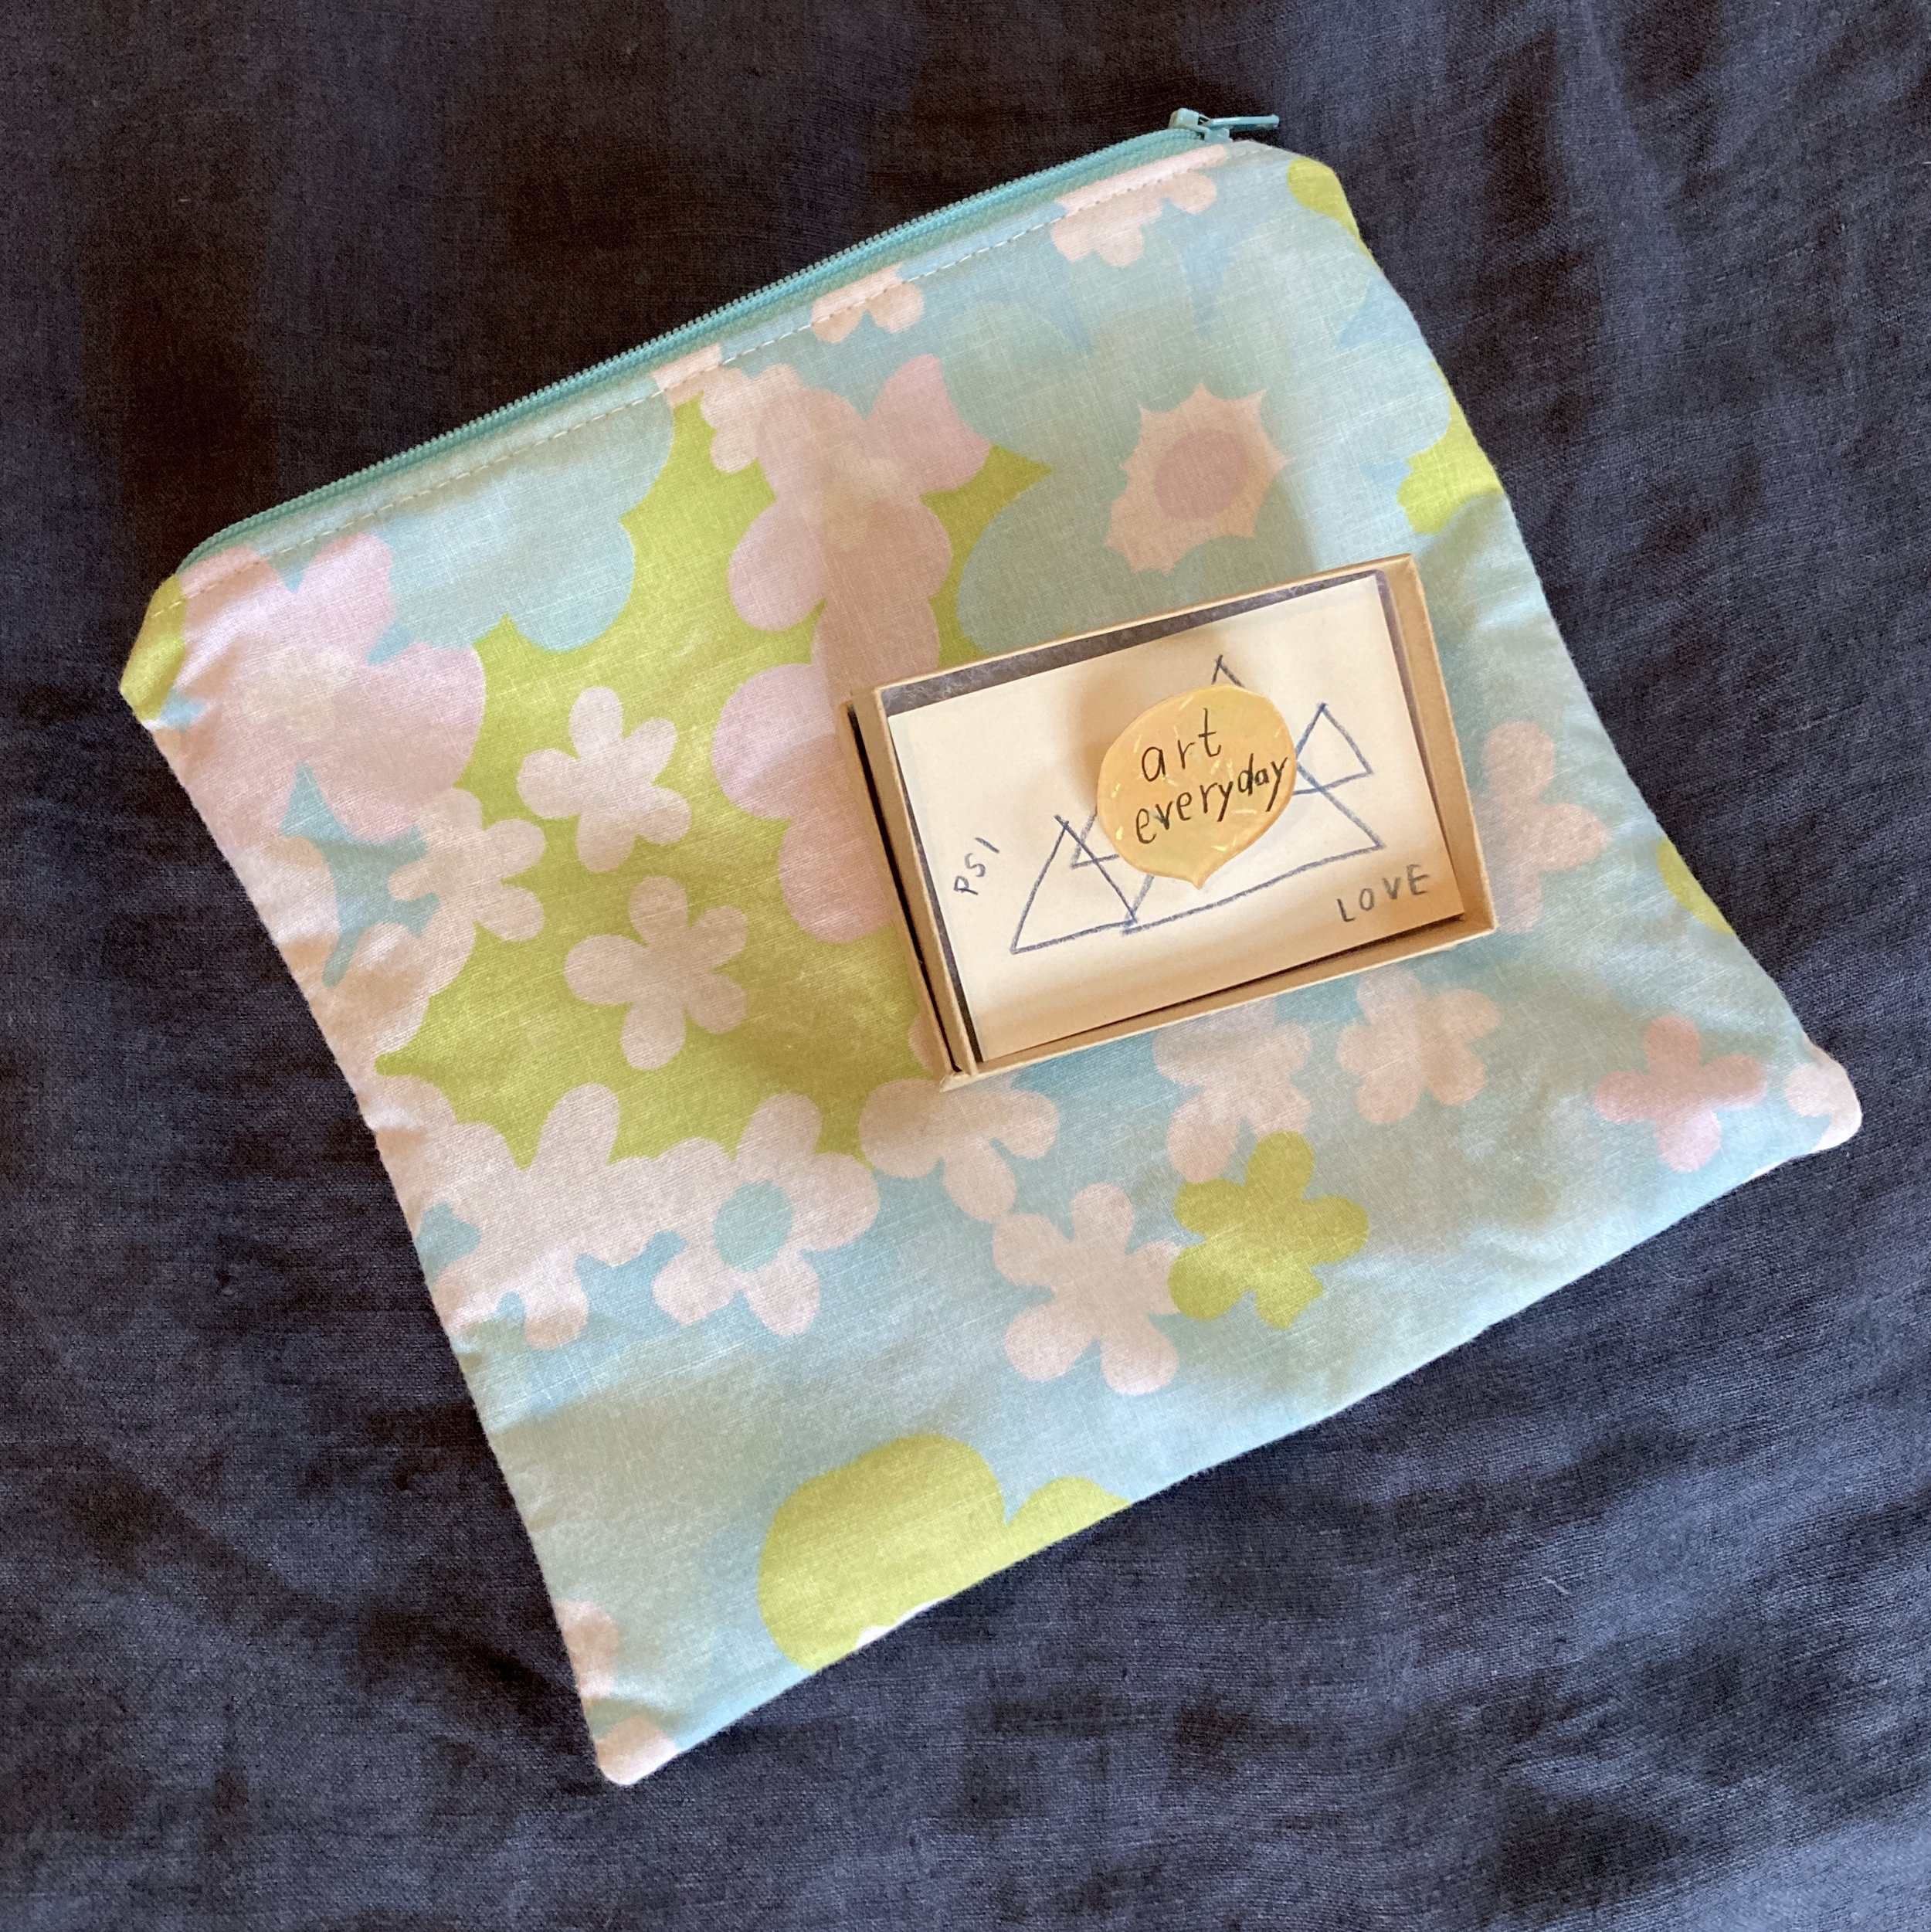 zipper bag (Ellen Schneider) and “art everyday” pin (Sayuri Sasaki Hemann)